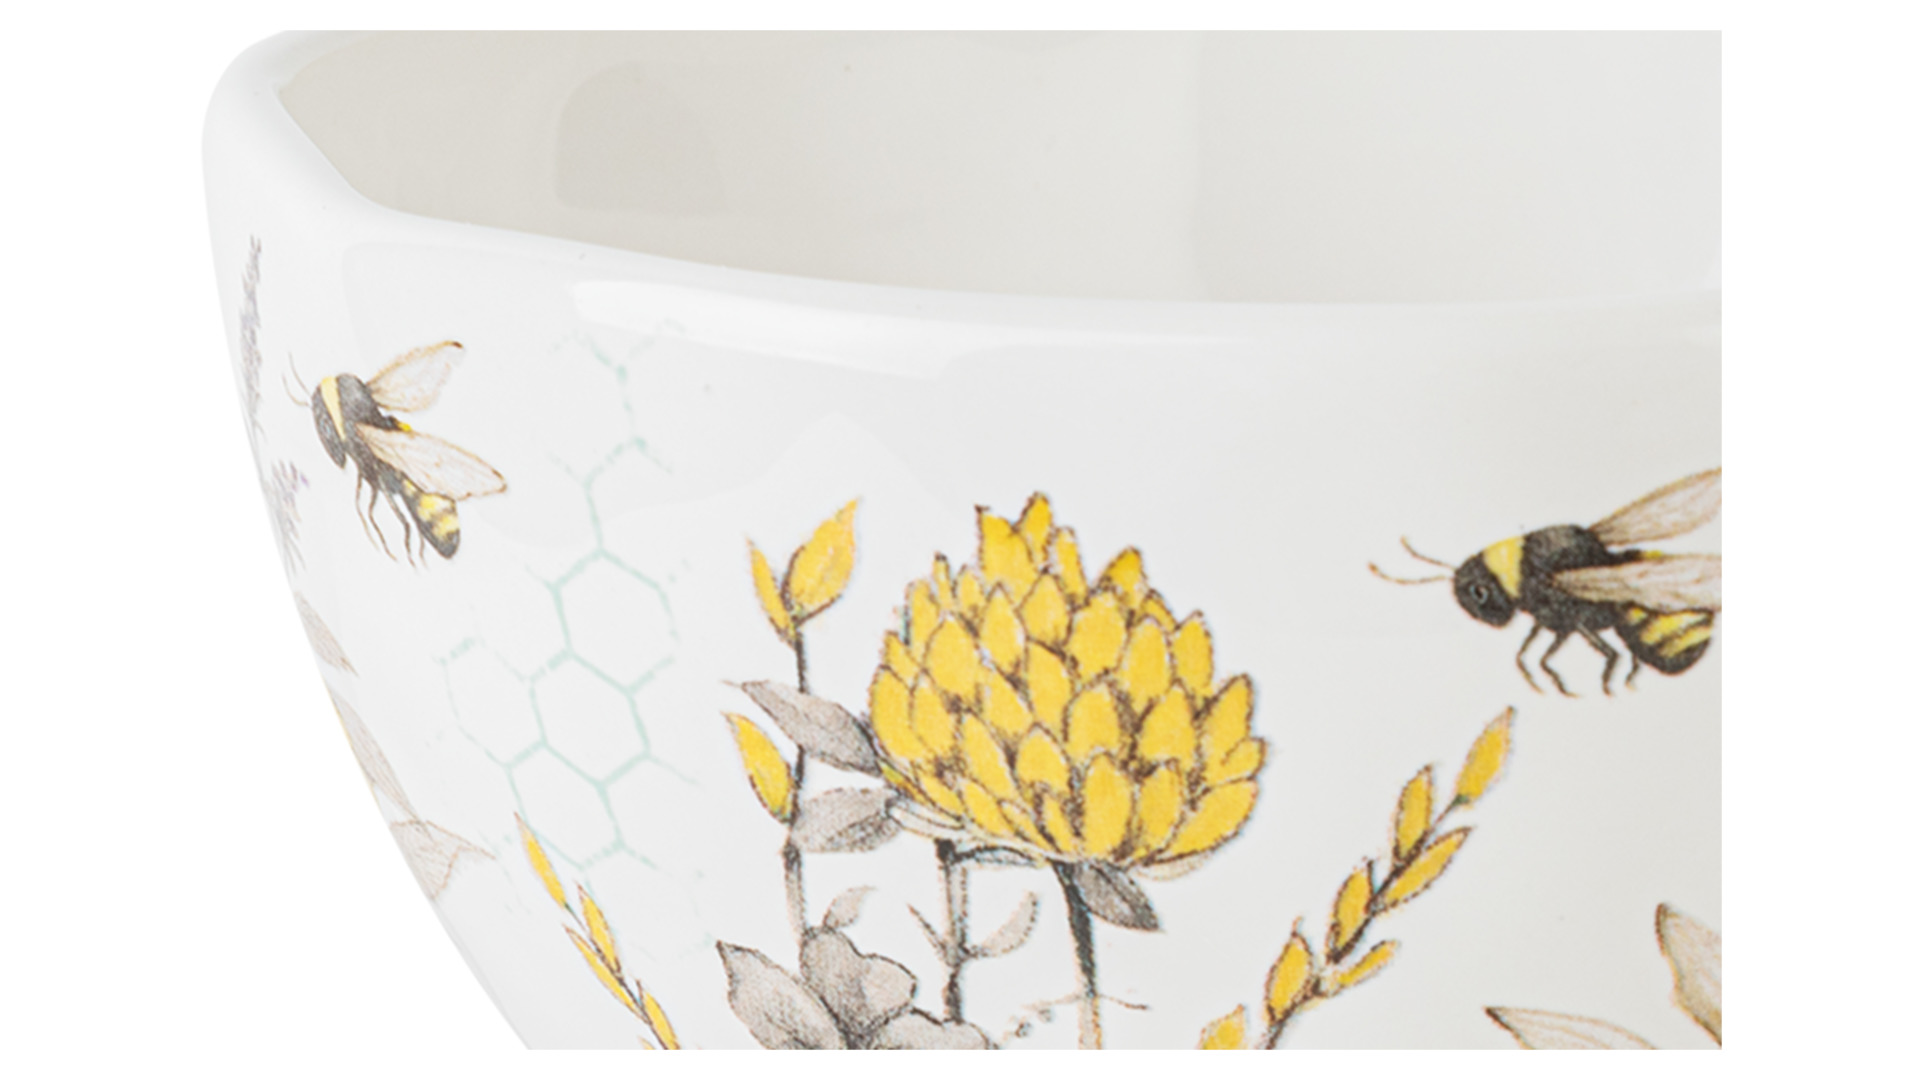 Салатник порционный Certified Int. Пчелки. Bee sweet 15 см, керамика